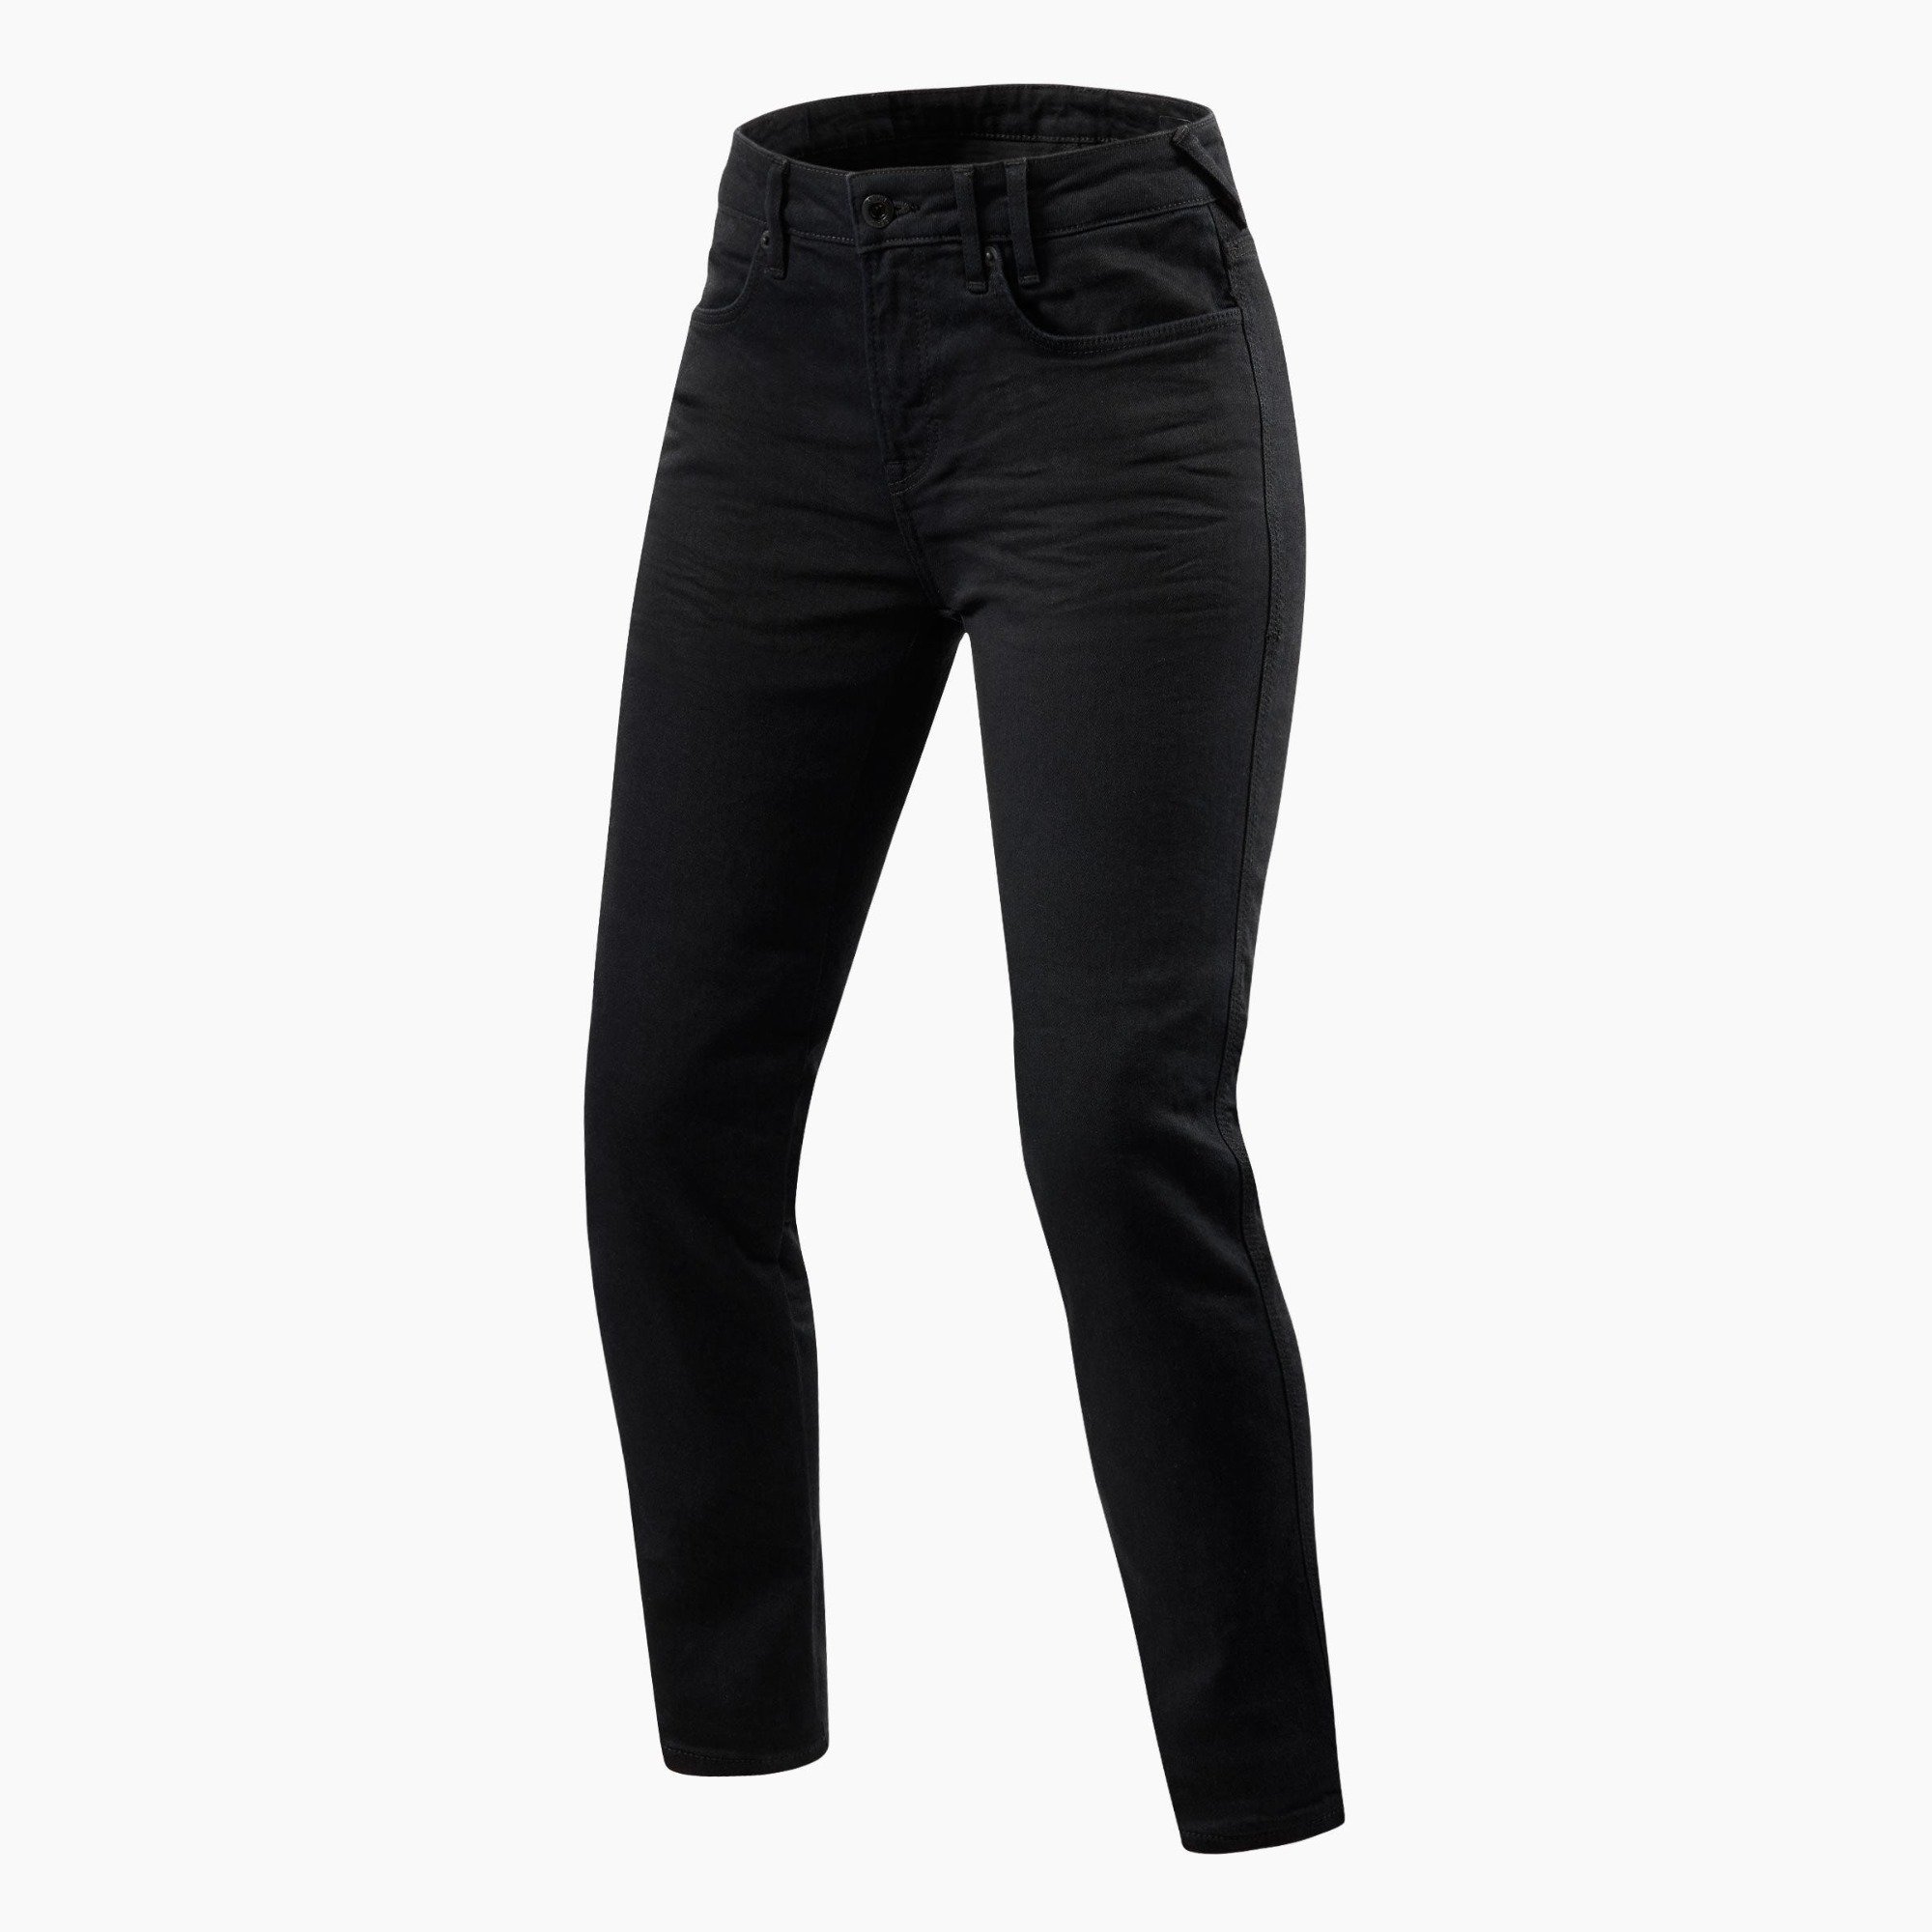 Image of REV'IT! Jeans Maple 2 Ladies SK Black Motorcycle Jeans Size L32/W29 EN